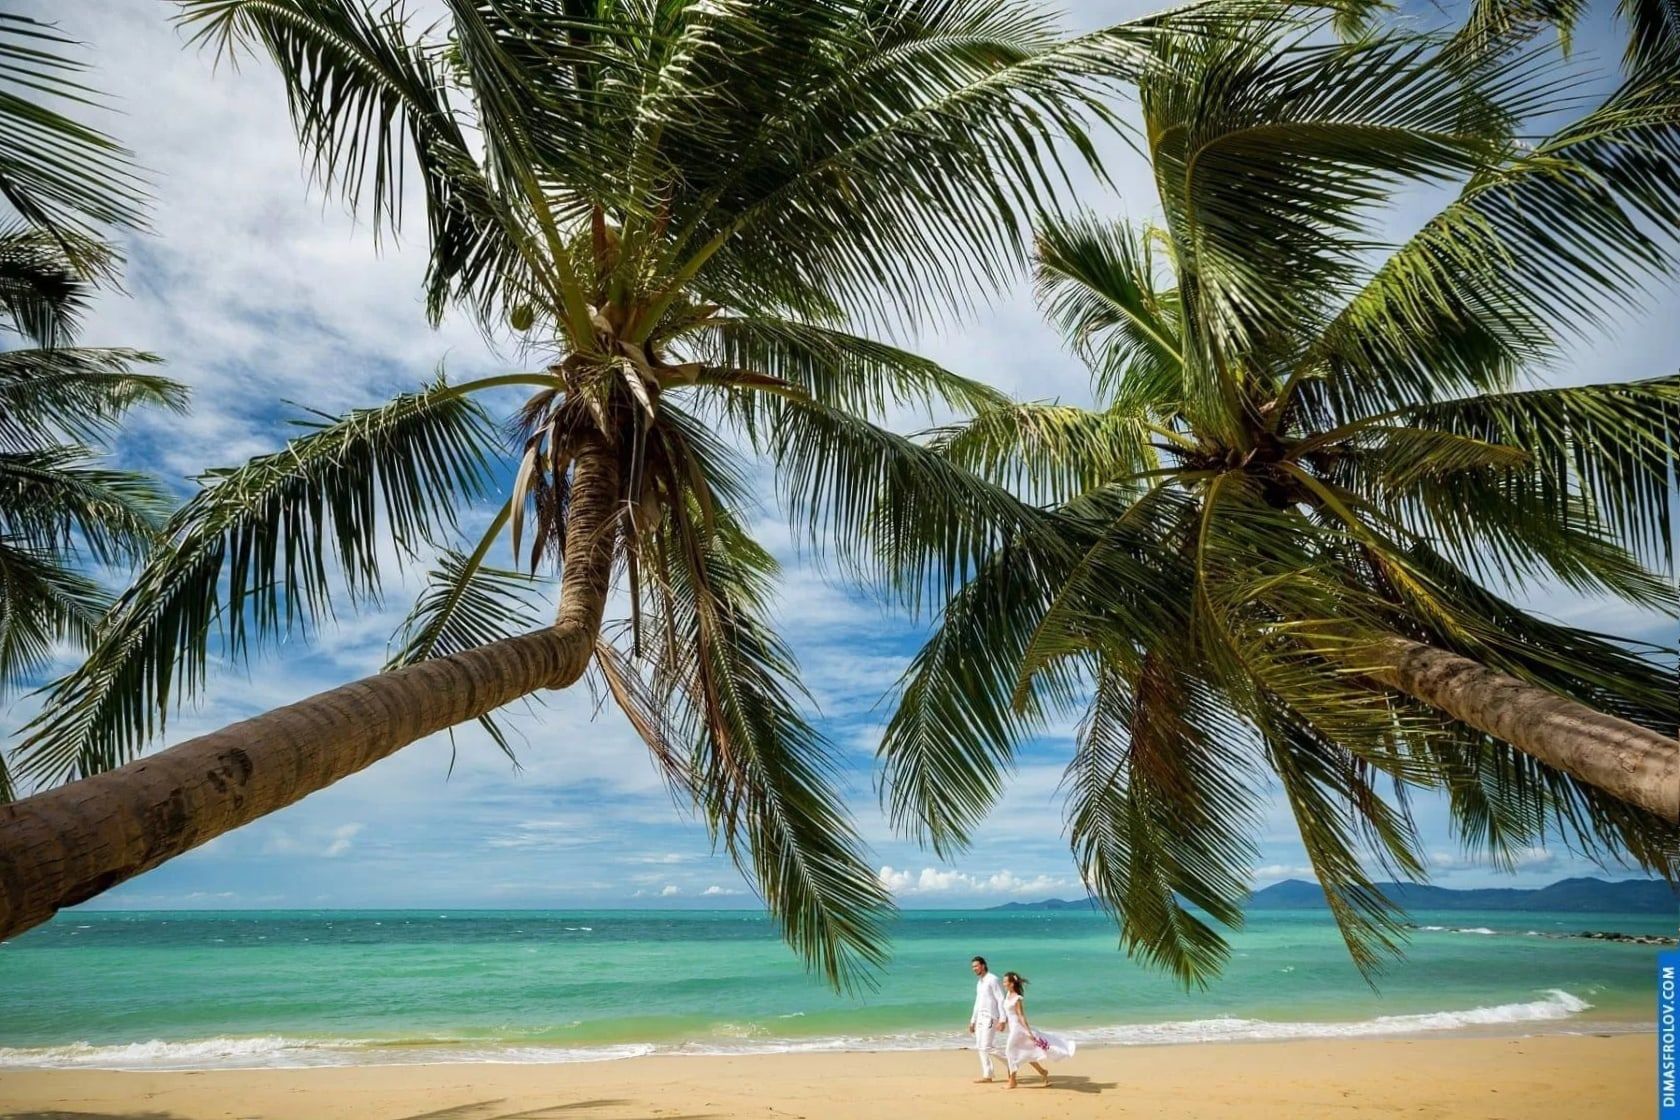 Post cover image: Samui Location for photo shoot: Mimosa Beach (Ban Tai)